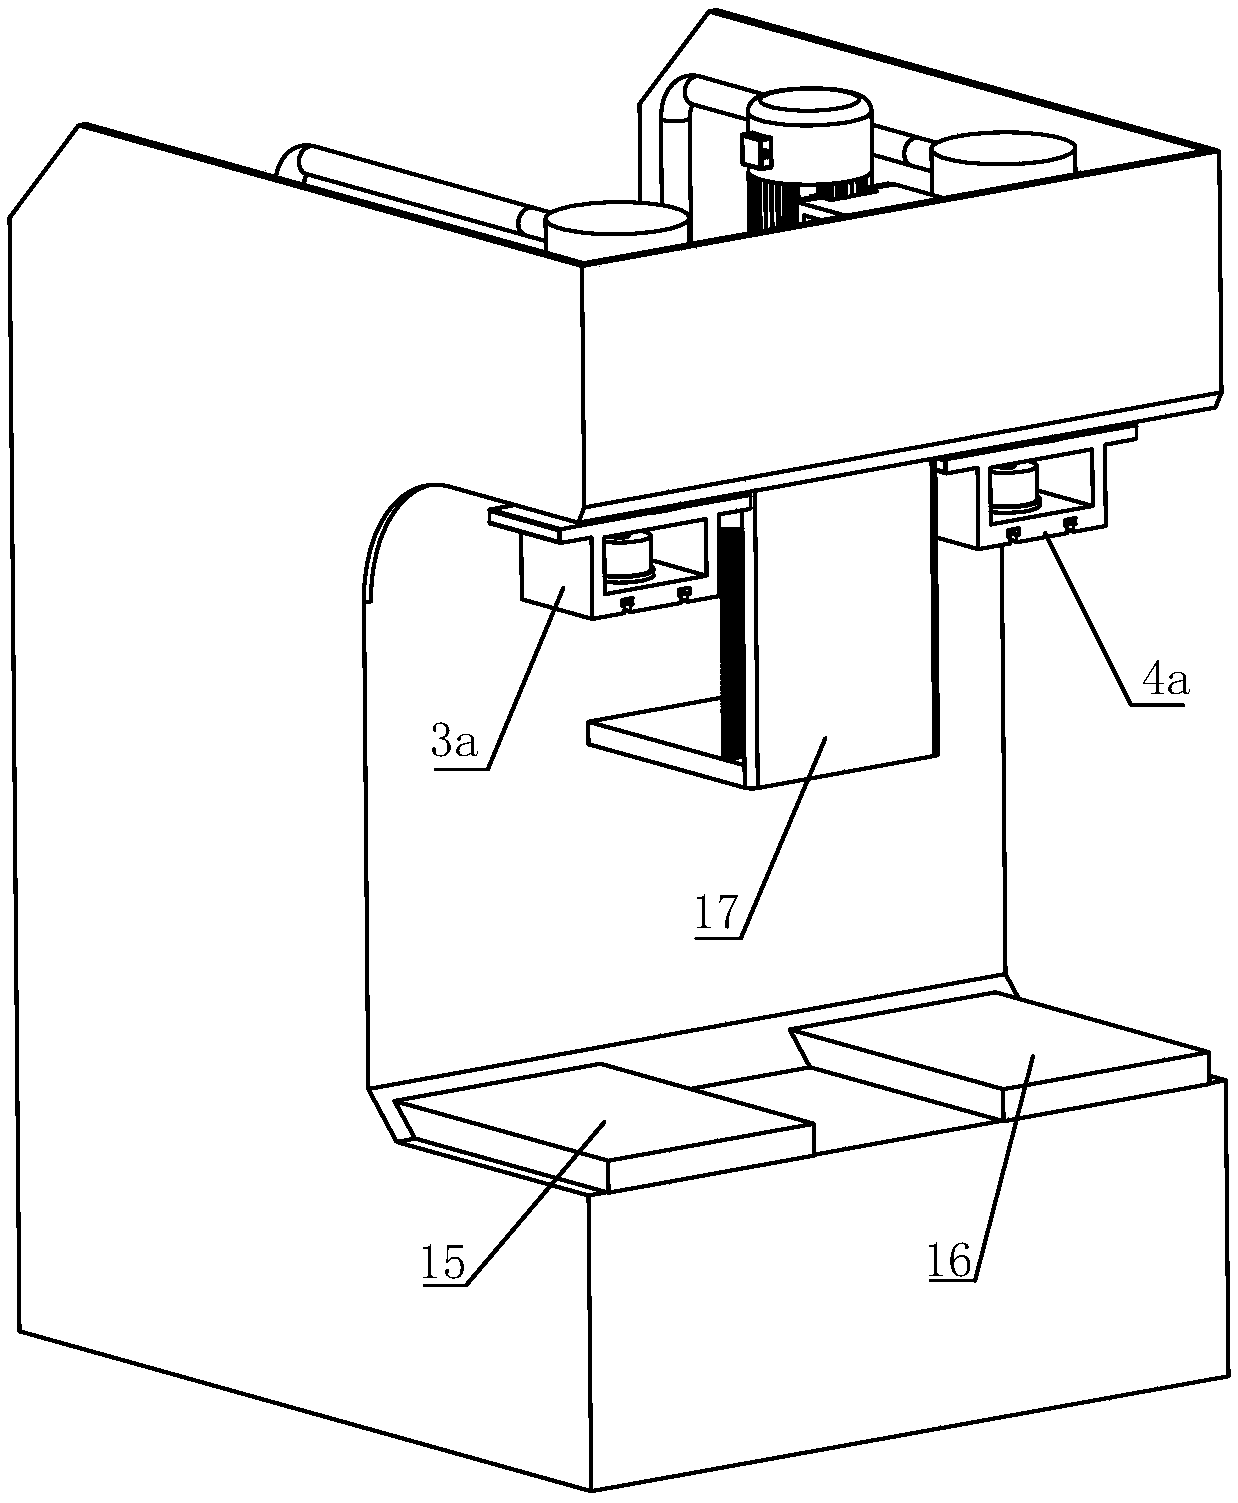 An electro-hydraulic hybrid press and its control method